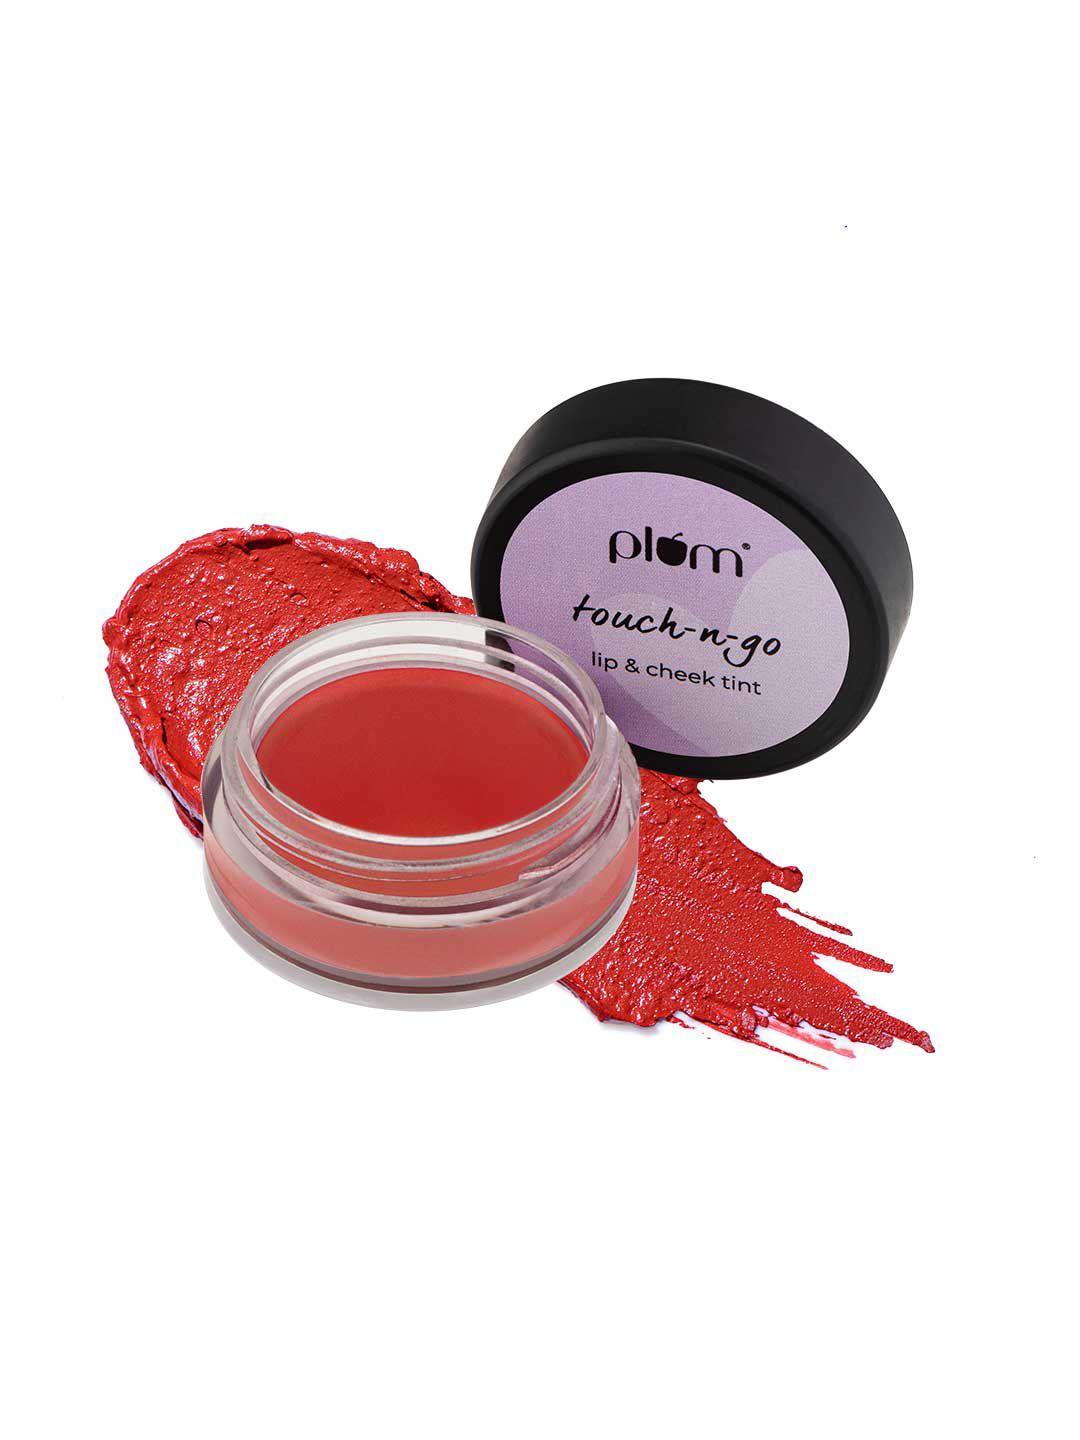 plum touch-n-go lip & cheek tint with jojoba oil & shea butter 6 g - coral craze 130